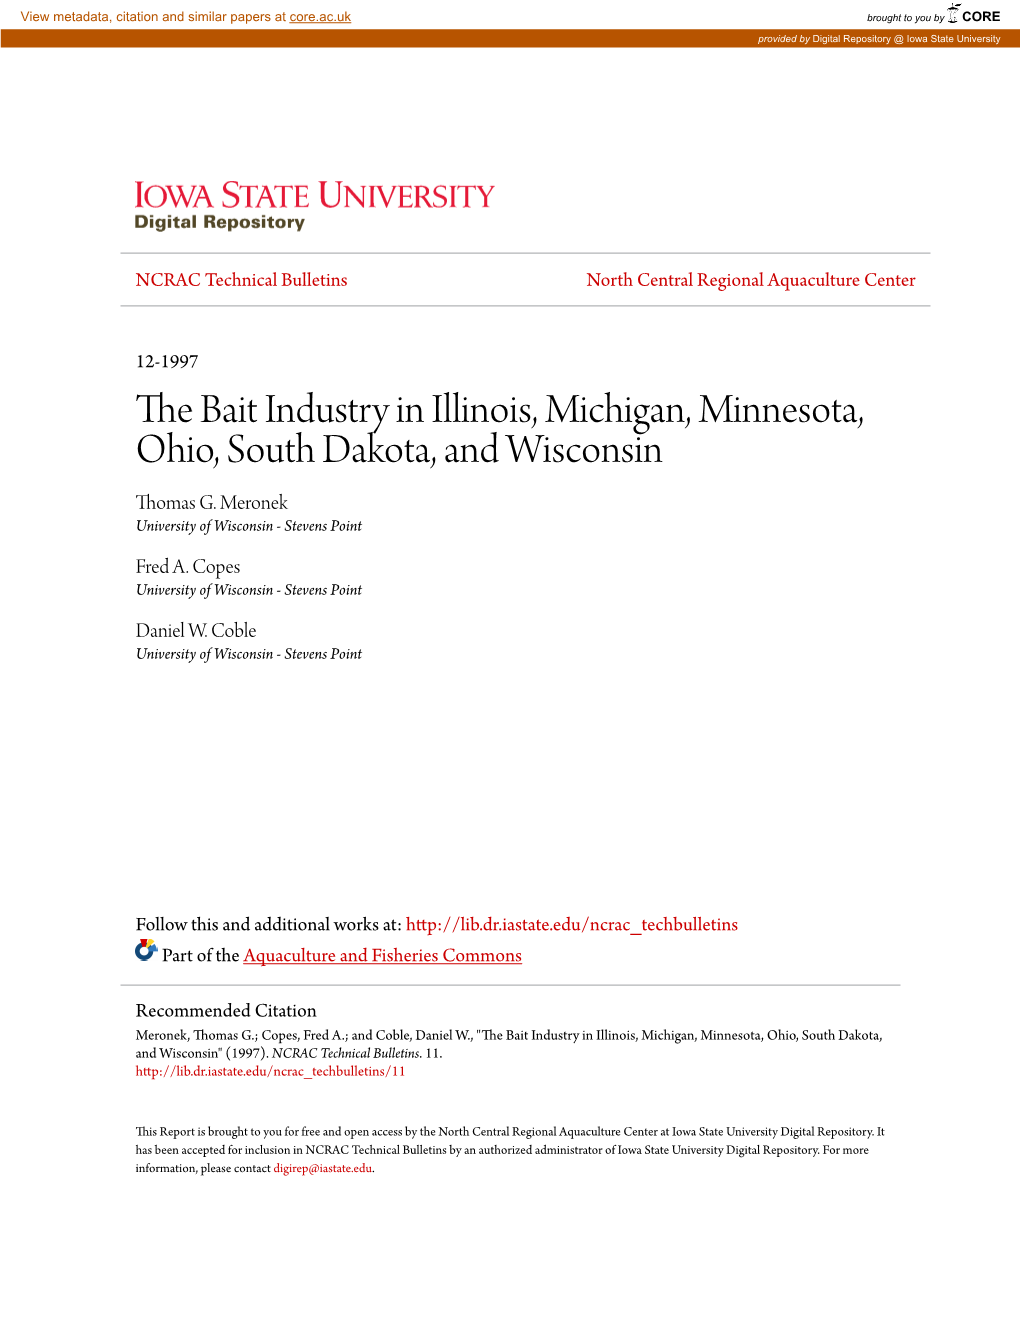 The Bait Industry in Illinois, Michigan, Minnesota, Ohio, South Dakota, and Wisconsin